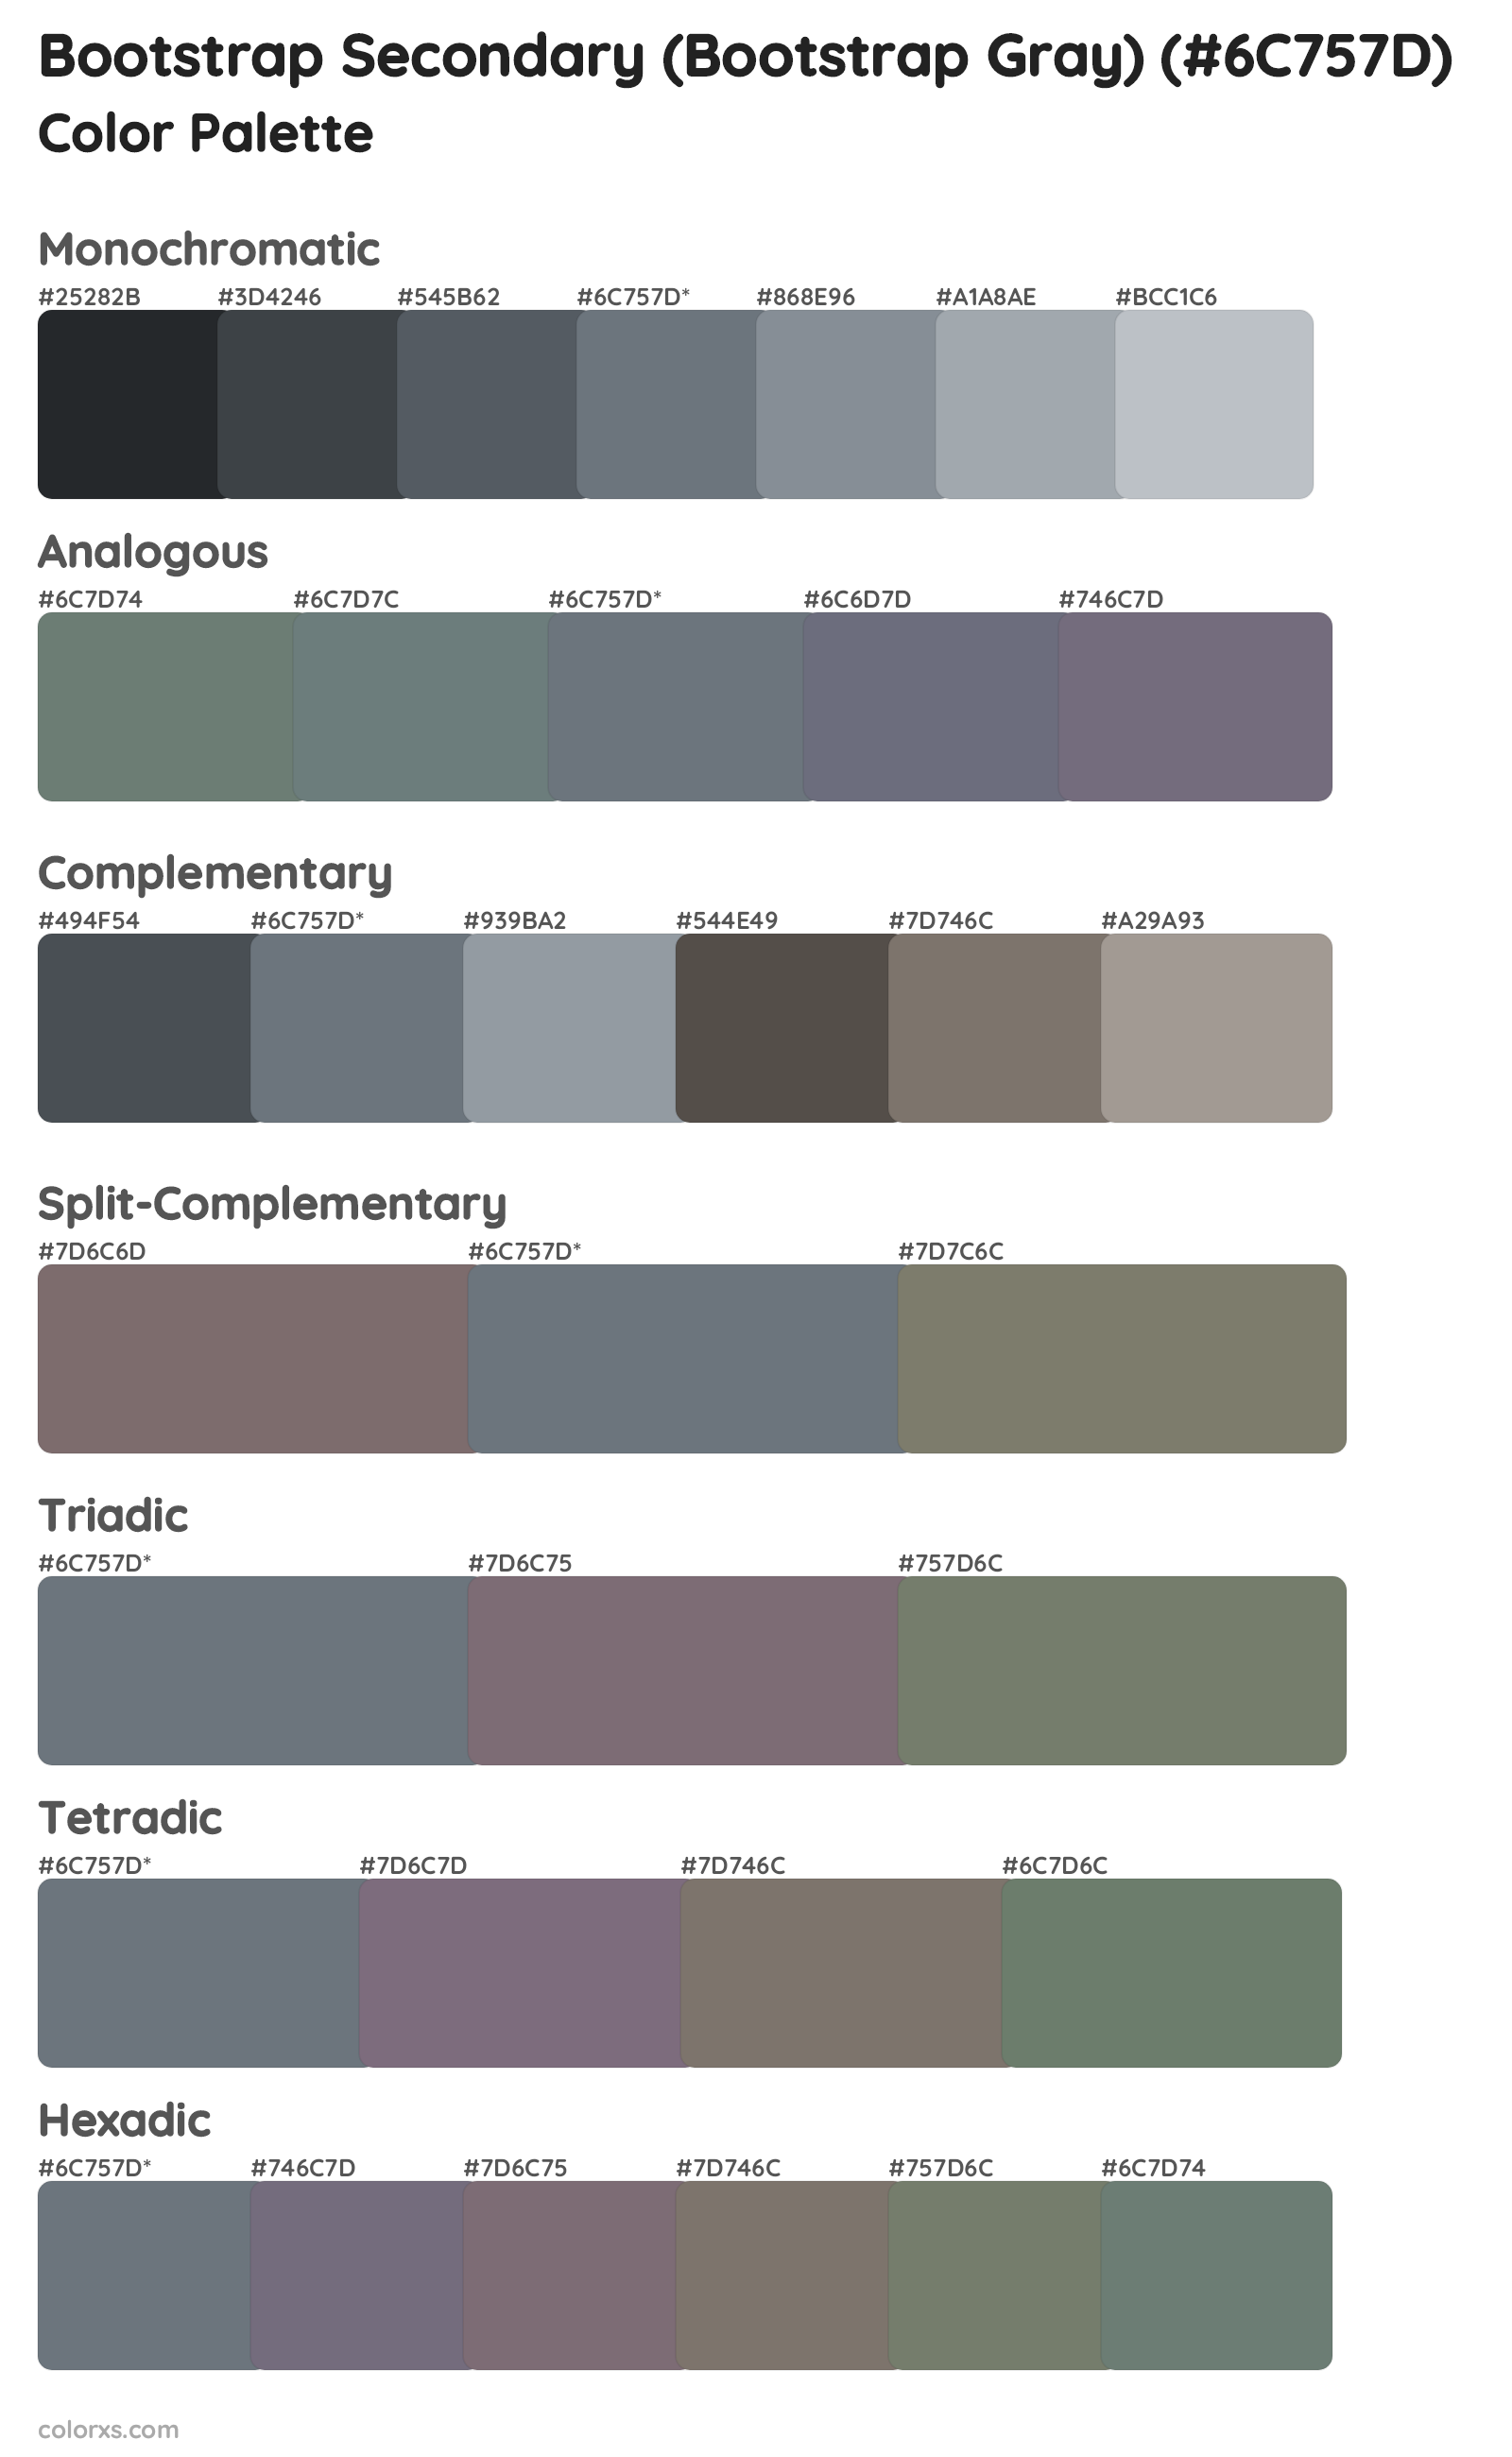 Bootstrap Secondary (Bootstrap Gray) Color Scheme Palettes